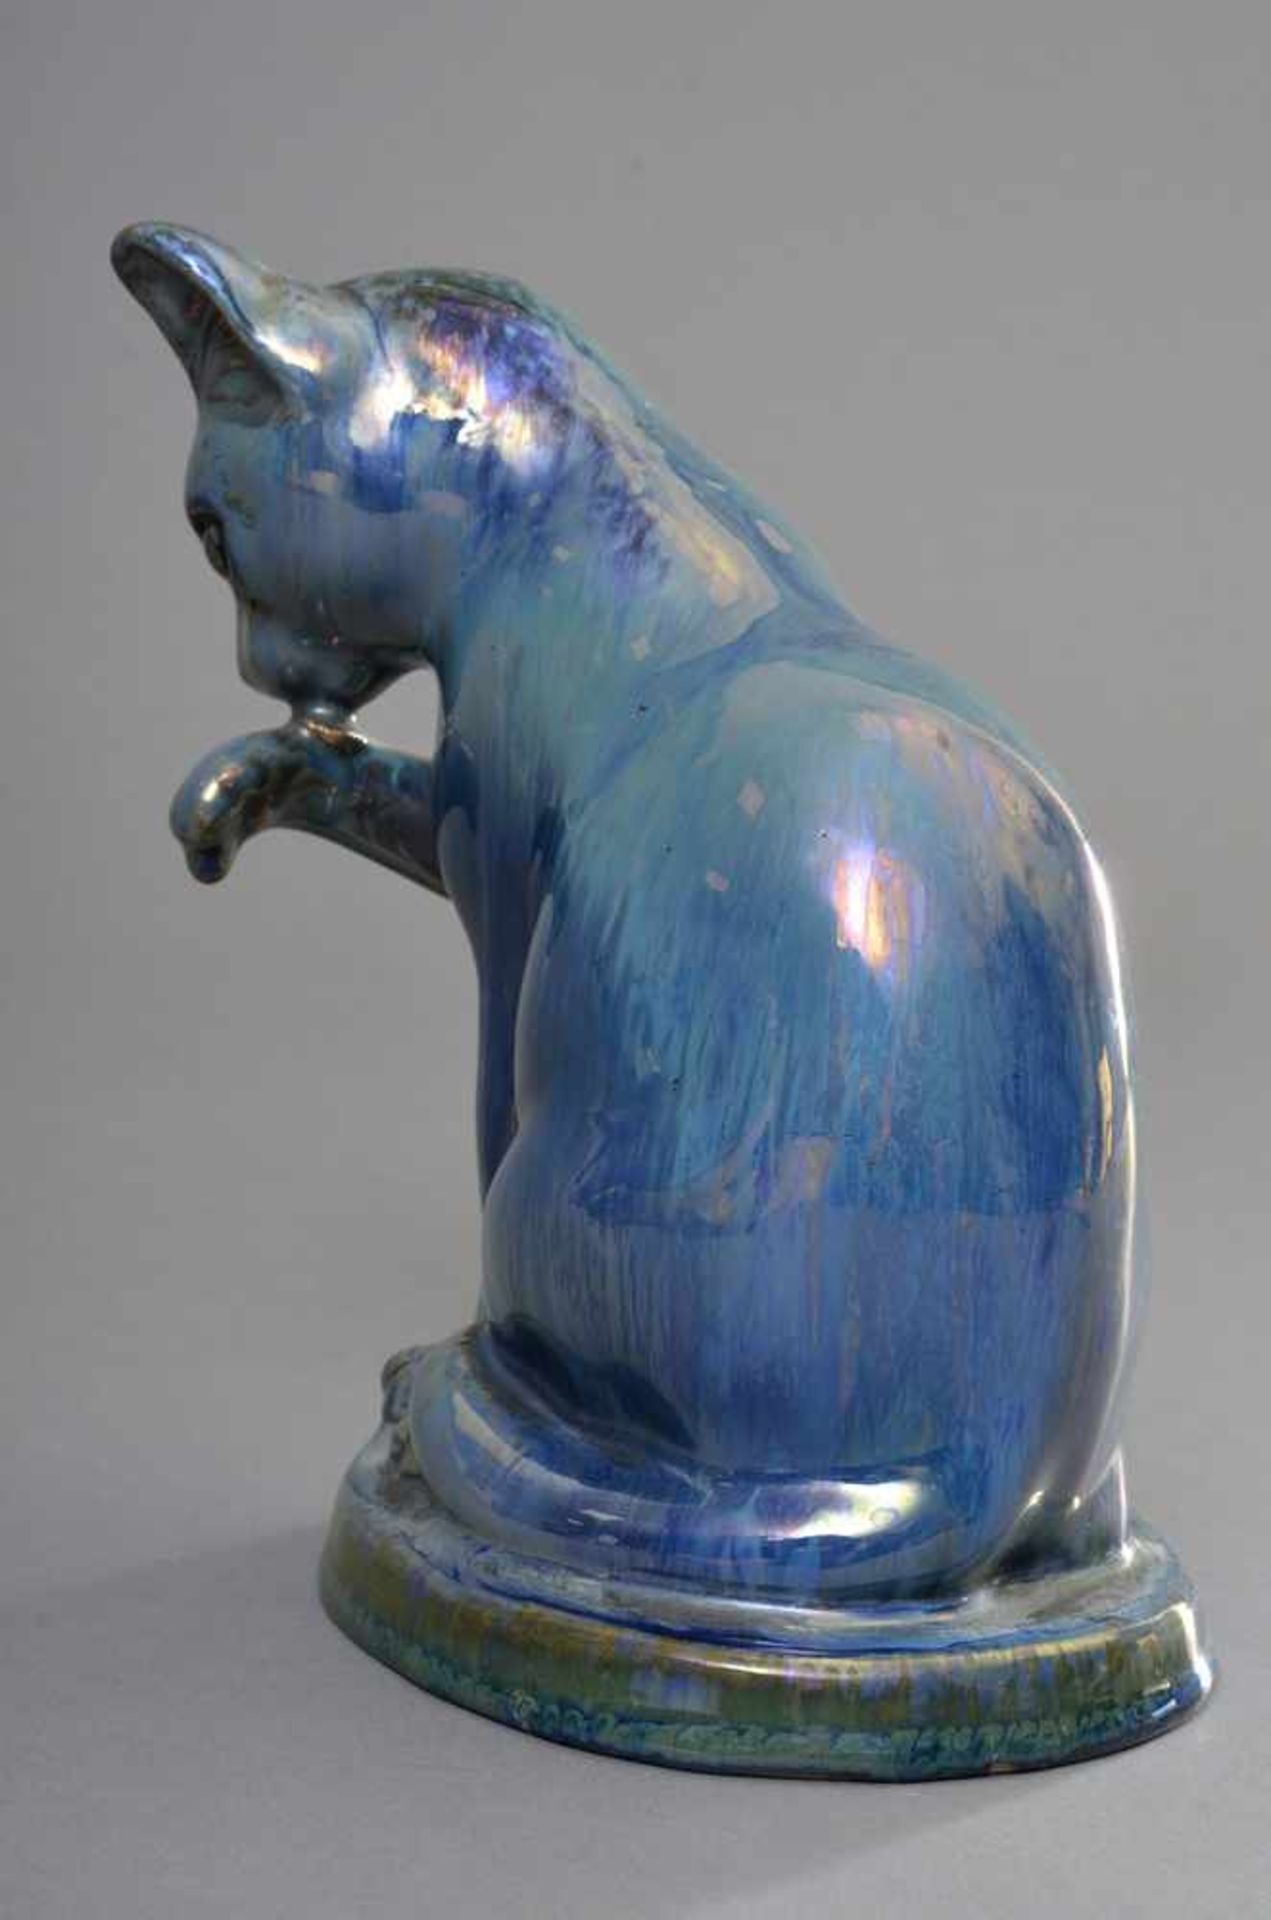 Keramik Figur "Sitzende Katze", blaue Lüsterglasur mit Glasaugen, Herst.: "Gres de Rambervillers", - Bild 2 aus 5